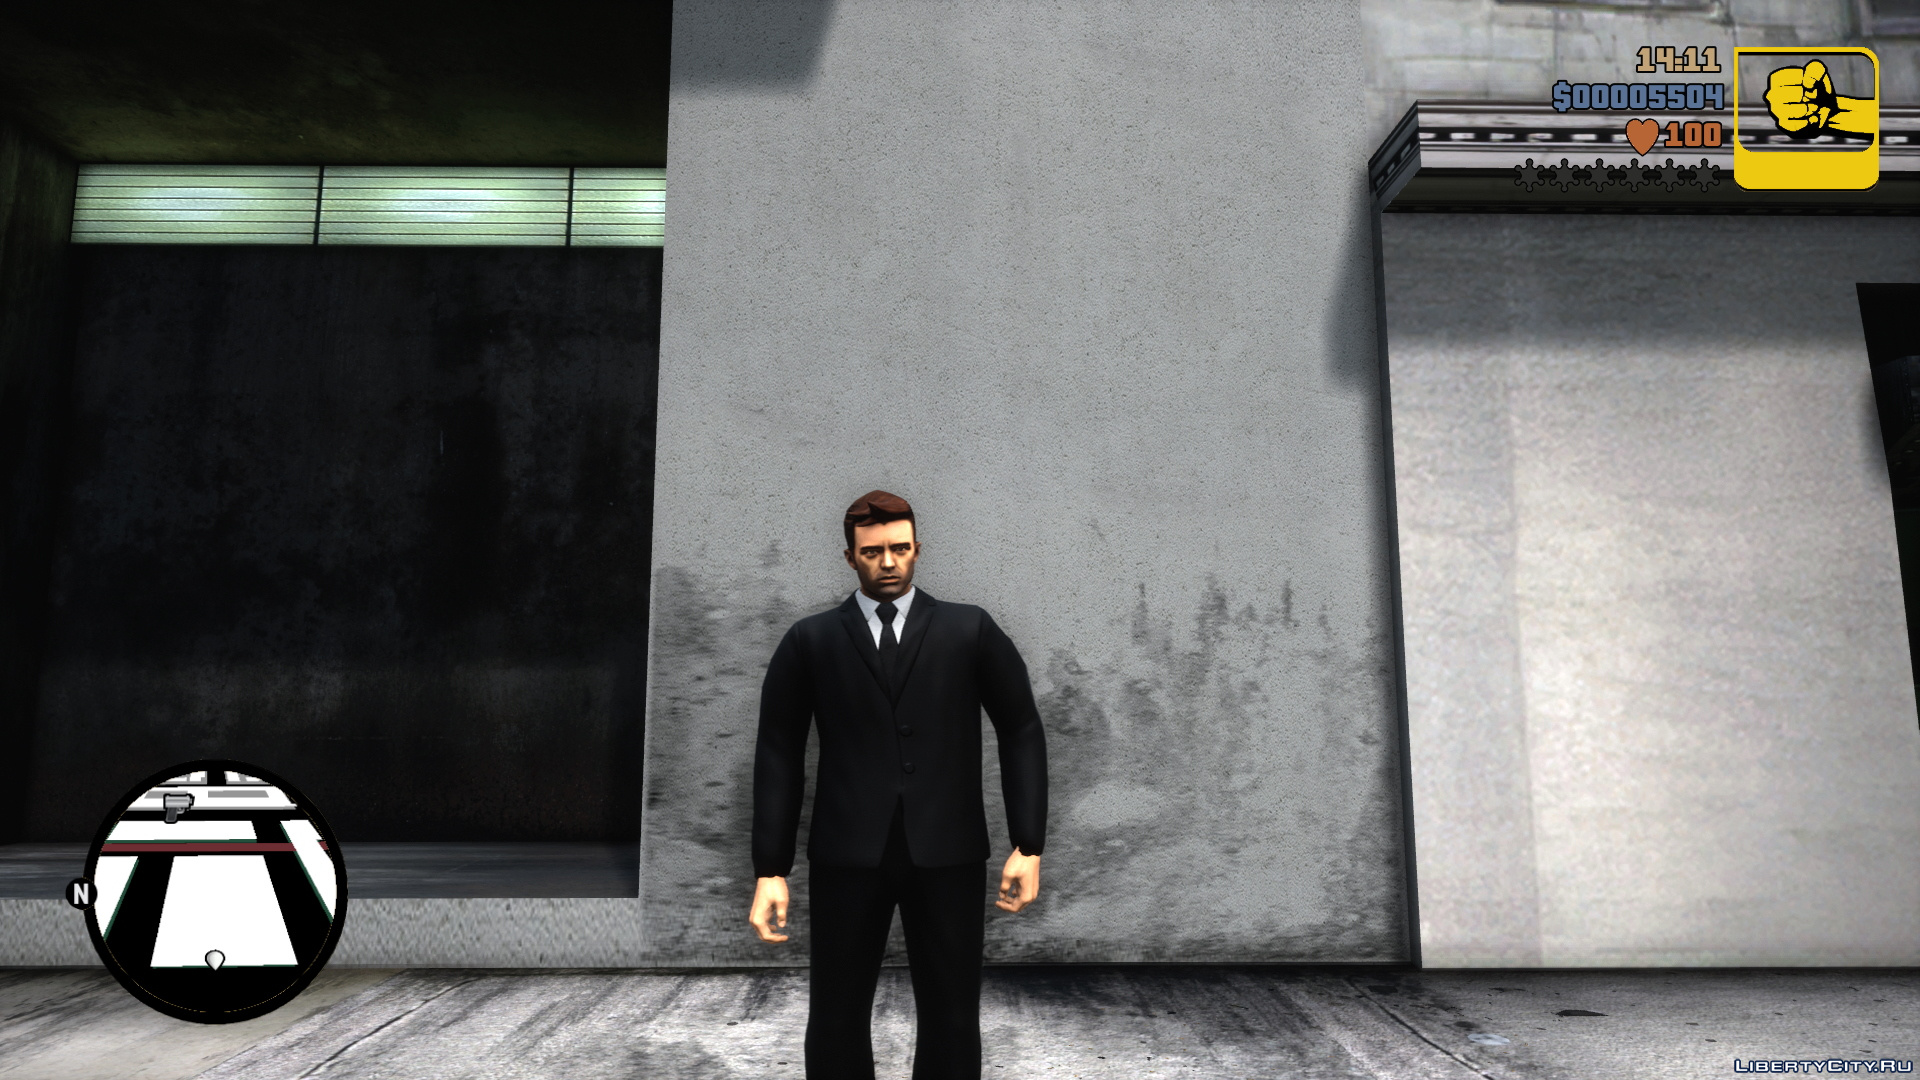 Gta3 Mod одажда Edition. GTA 3 Claude in Suit. Игра на Леоне мафия. Кто предал главного персонажа гта 3